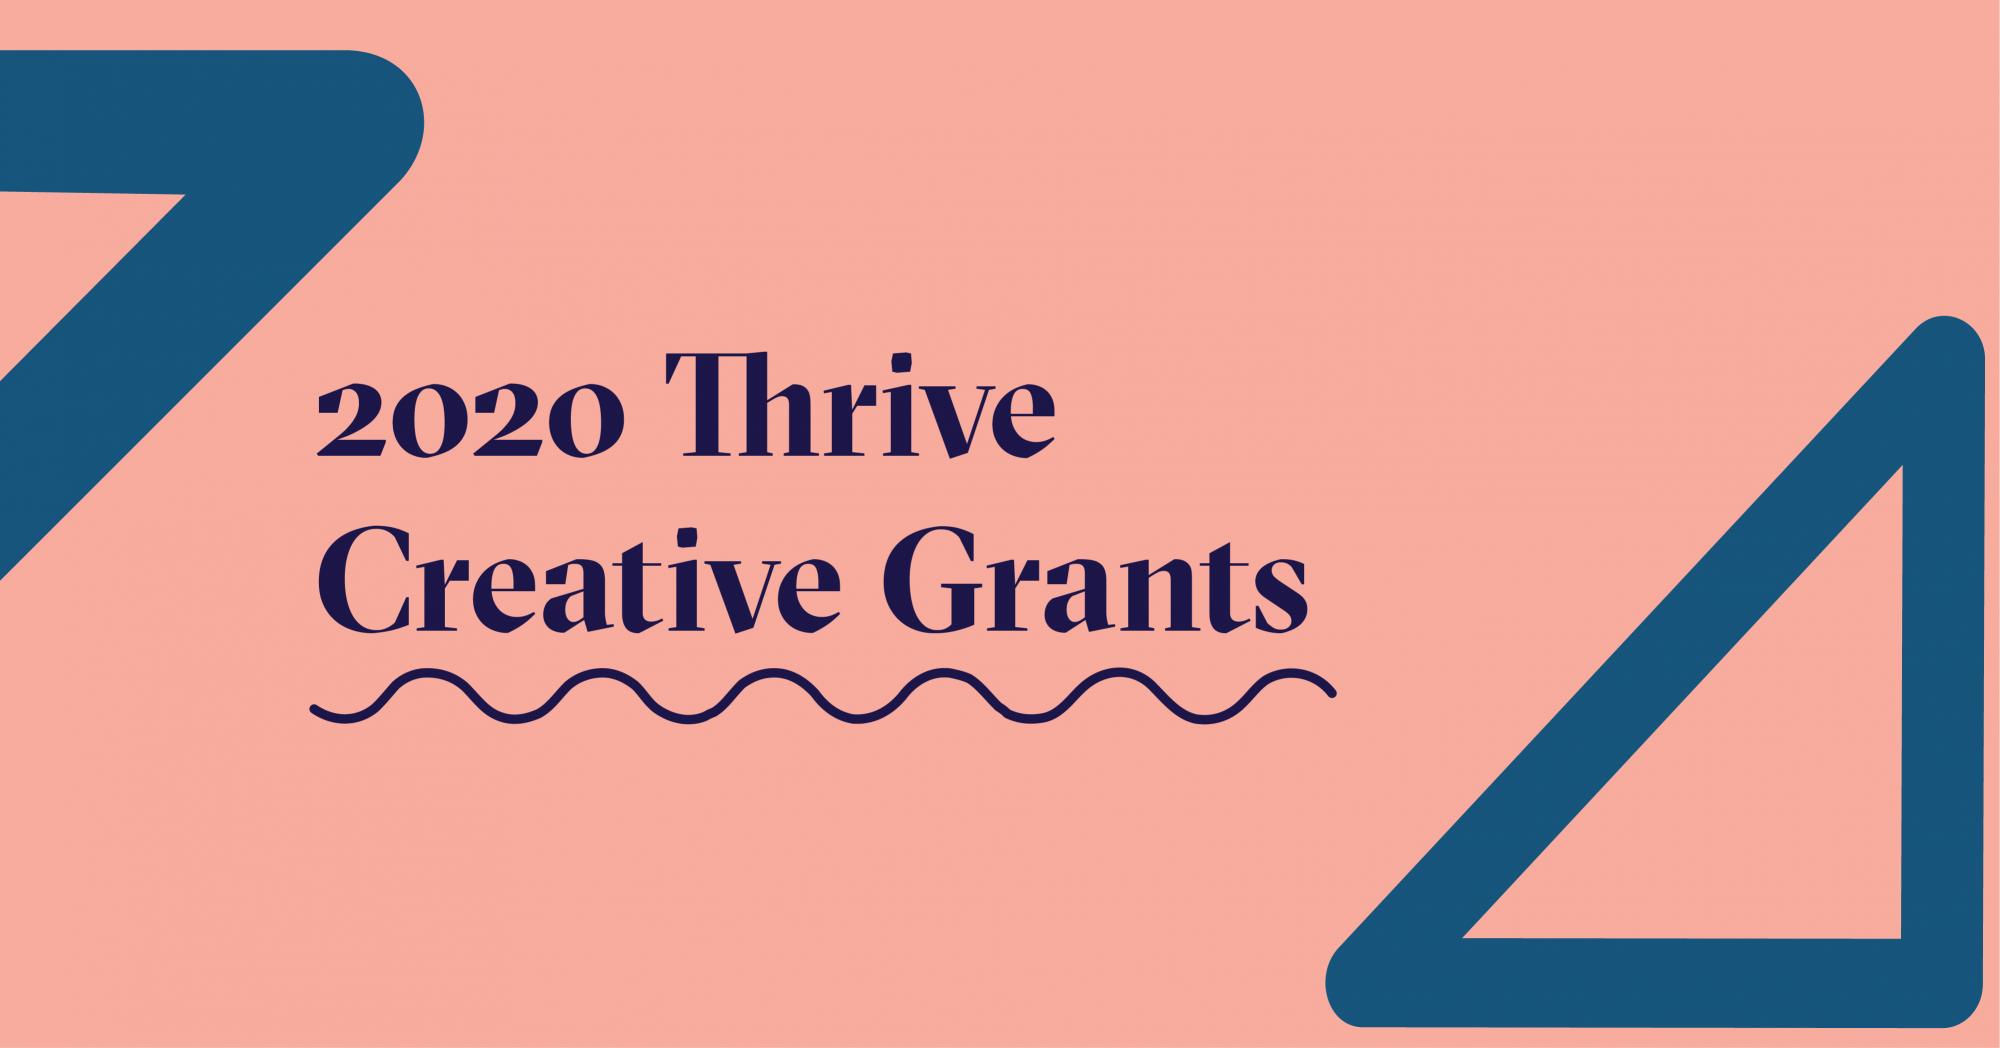 2020 thrive creative grants banner